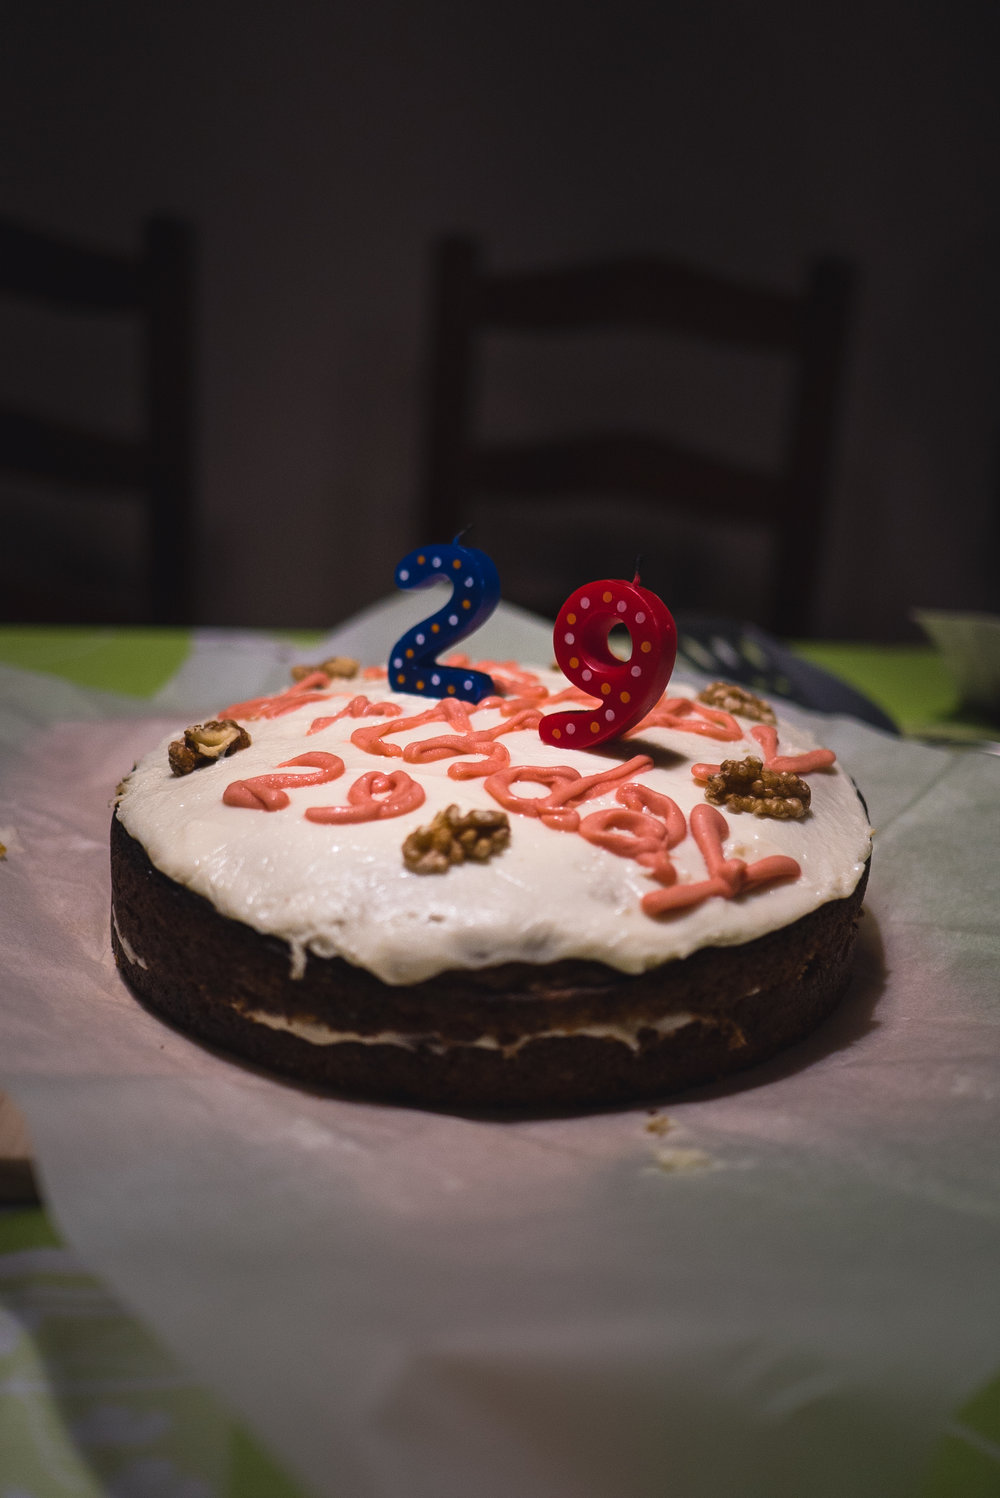 Birthday cake for Jon's surprise birthday party 😍